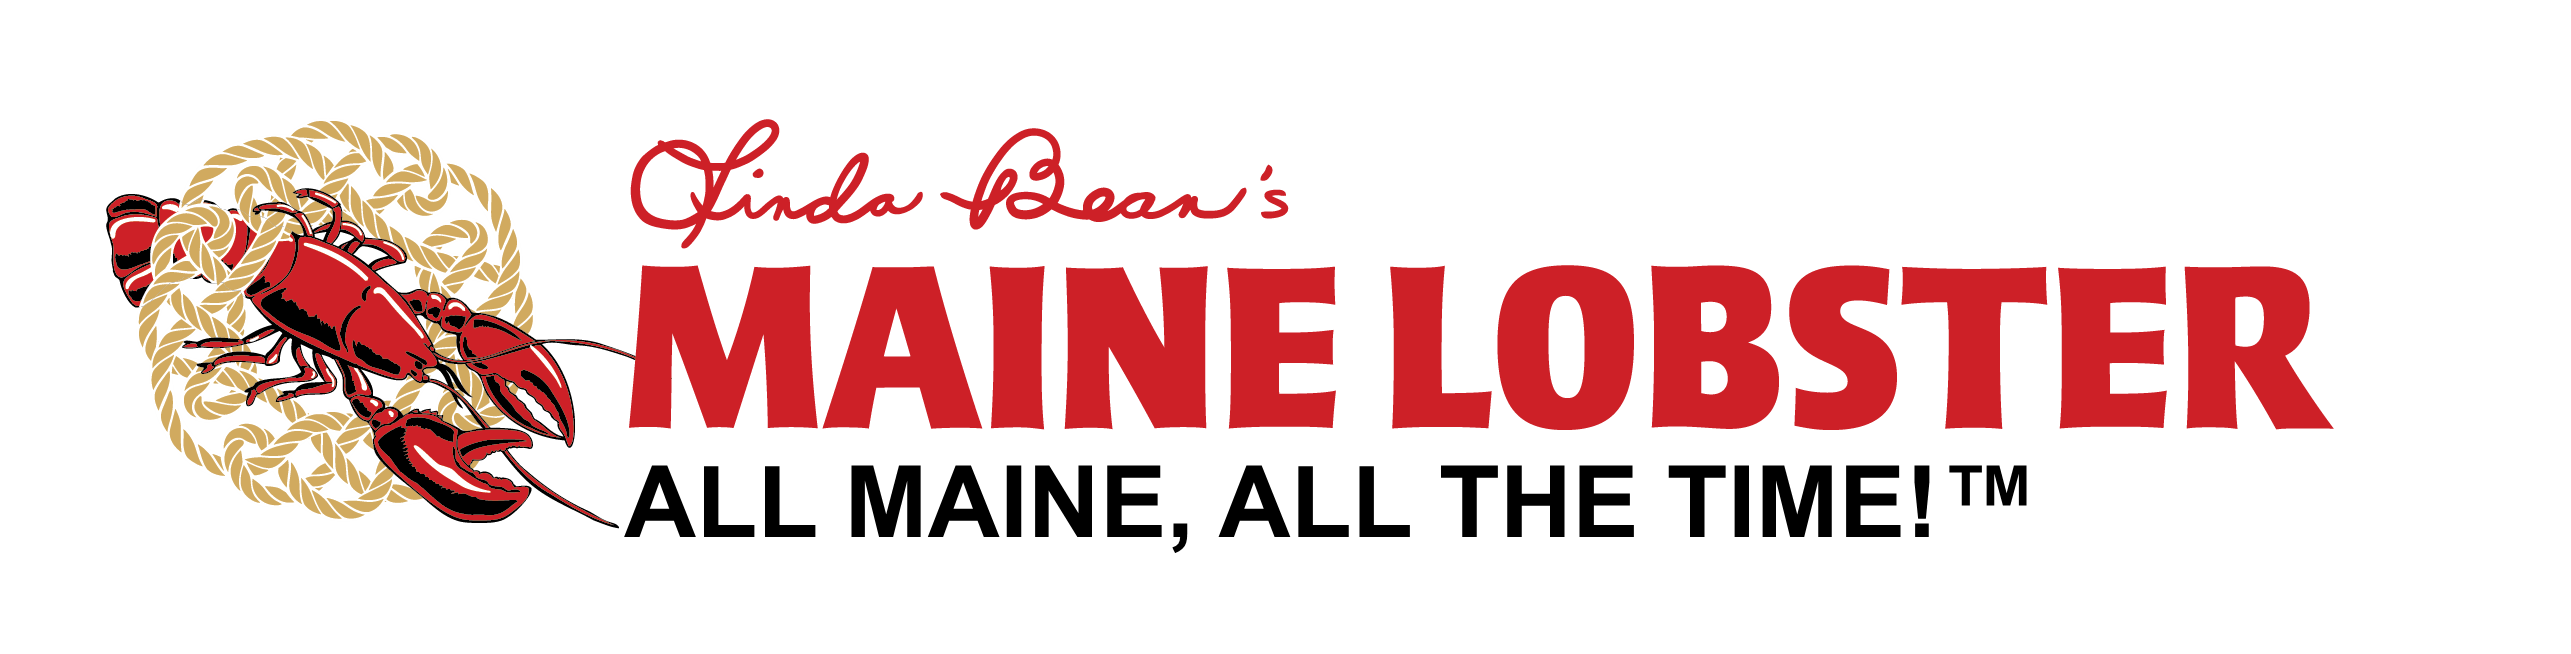 Linda Beans Maine Lobster